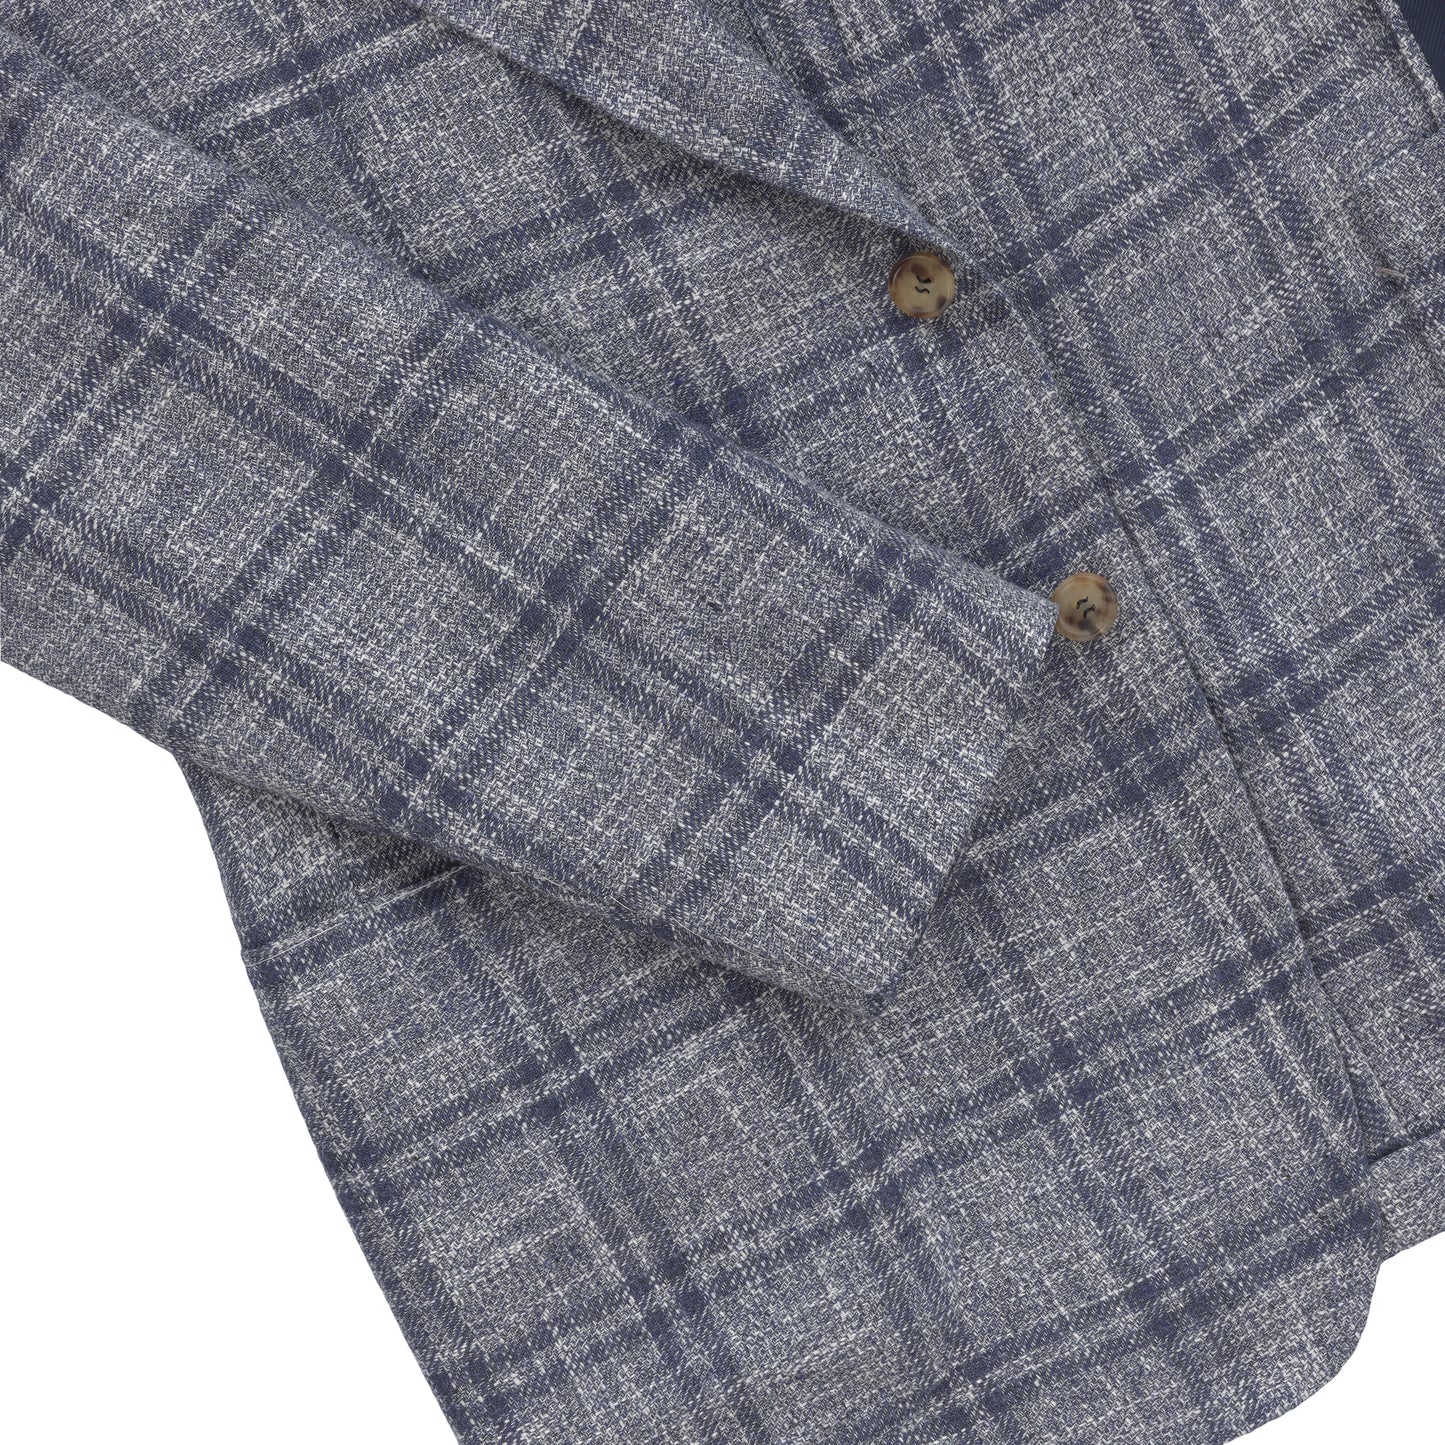 Linen-Wool Windowpane Jacket in Blue and Grey